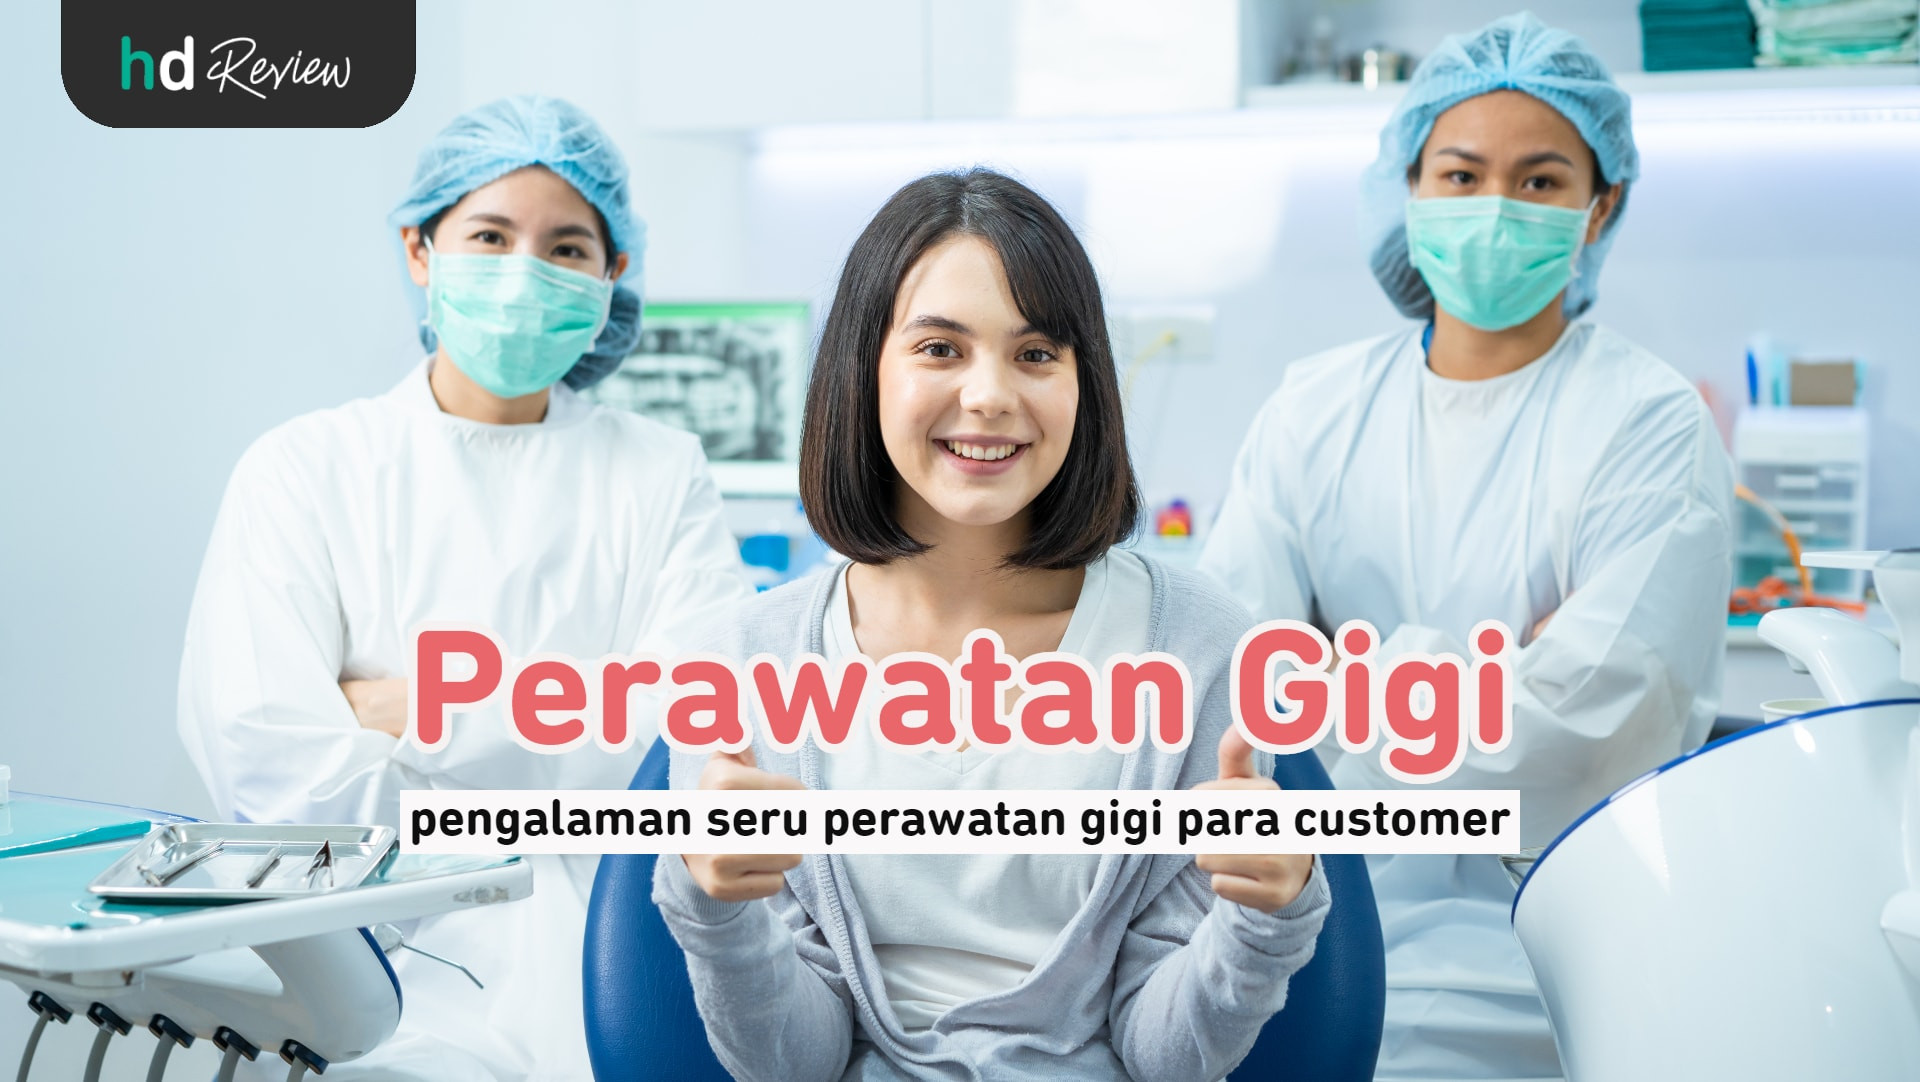 Perawatan Gigi reviews